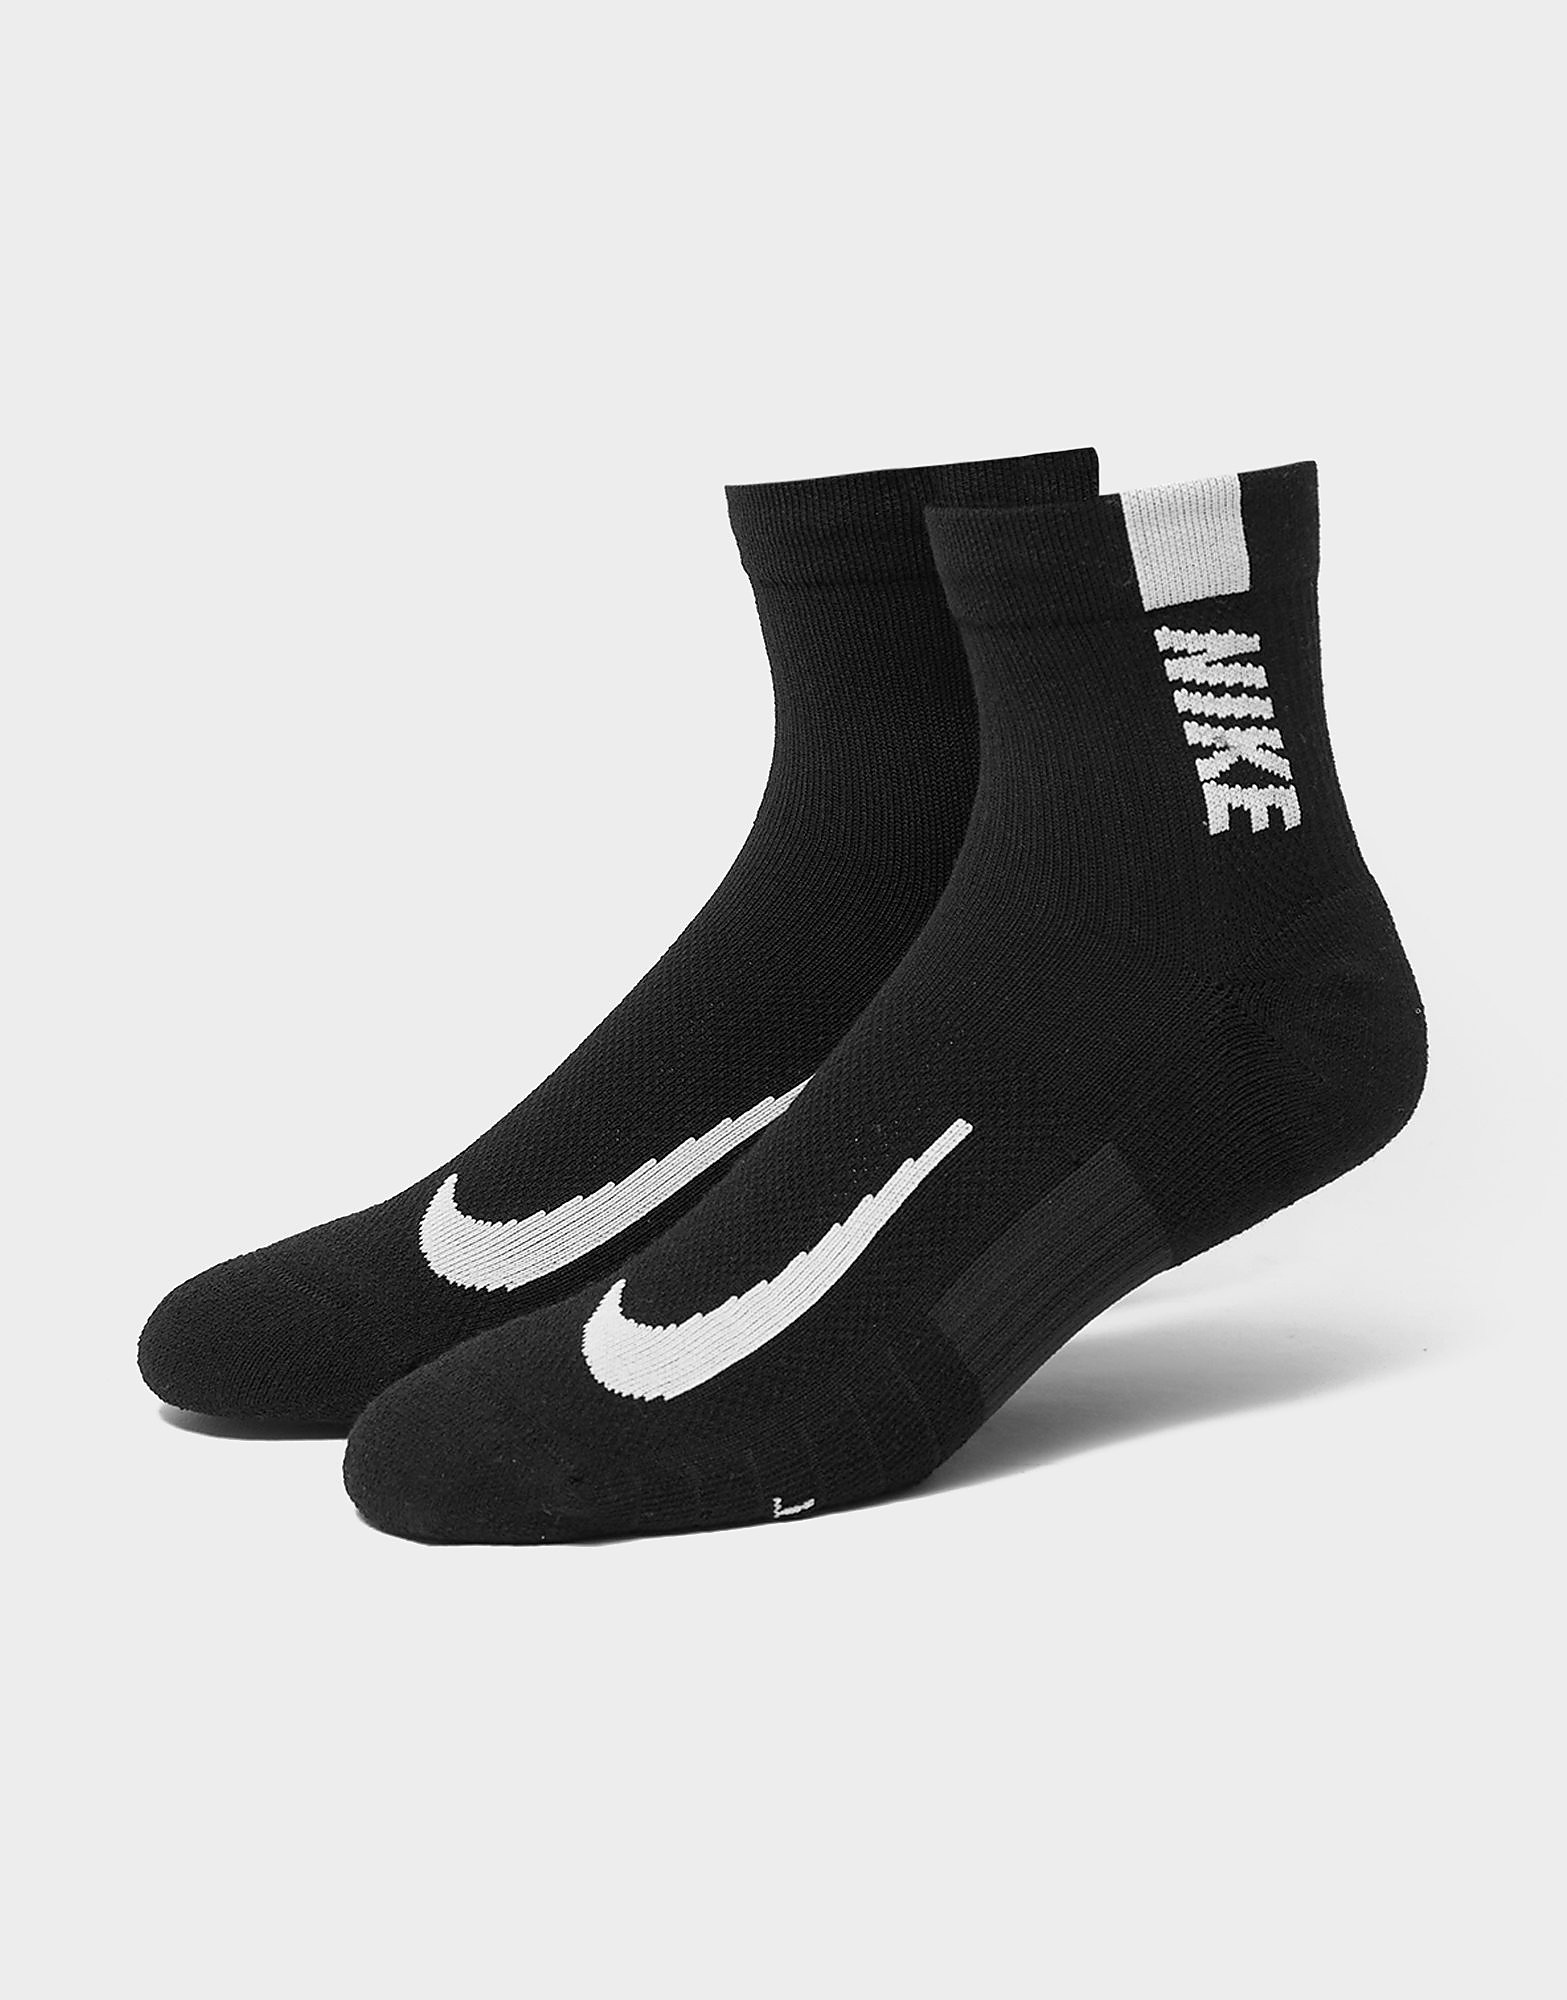 Nike multiplier-juoksusukat 2 kpl - mens, musta, nike